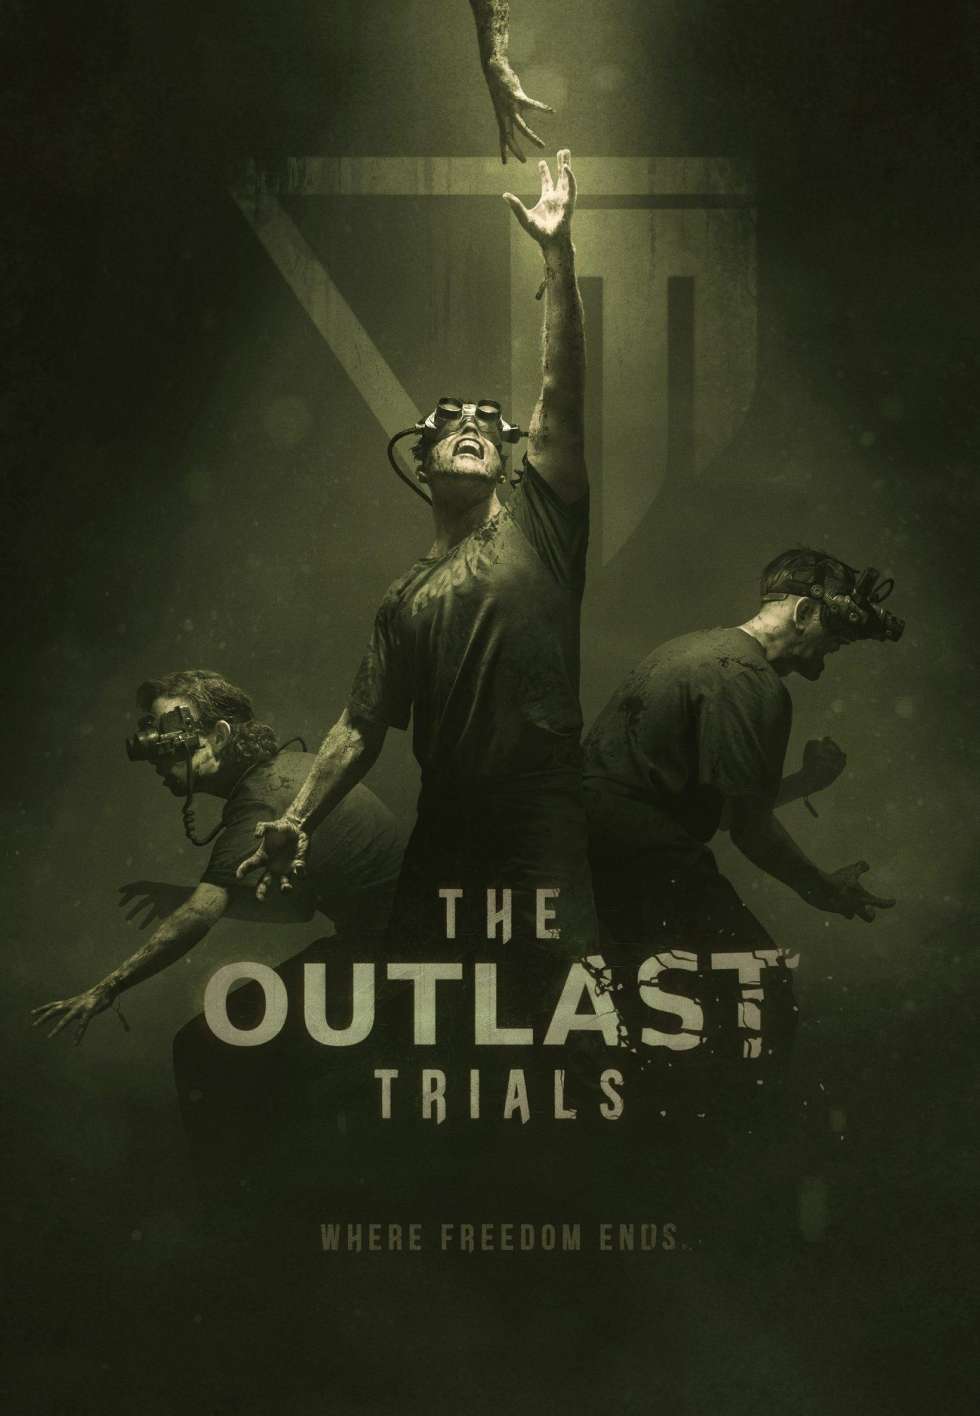 Red Barrels анонсировали следующую часть Outlast, The Outlast Trials